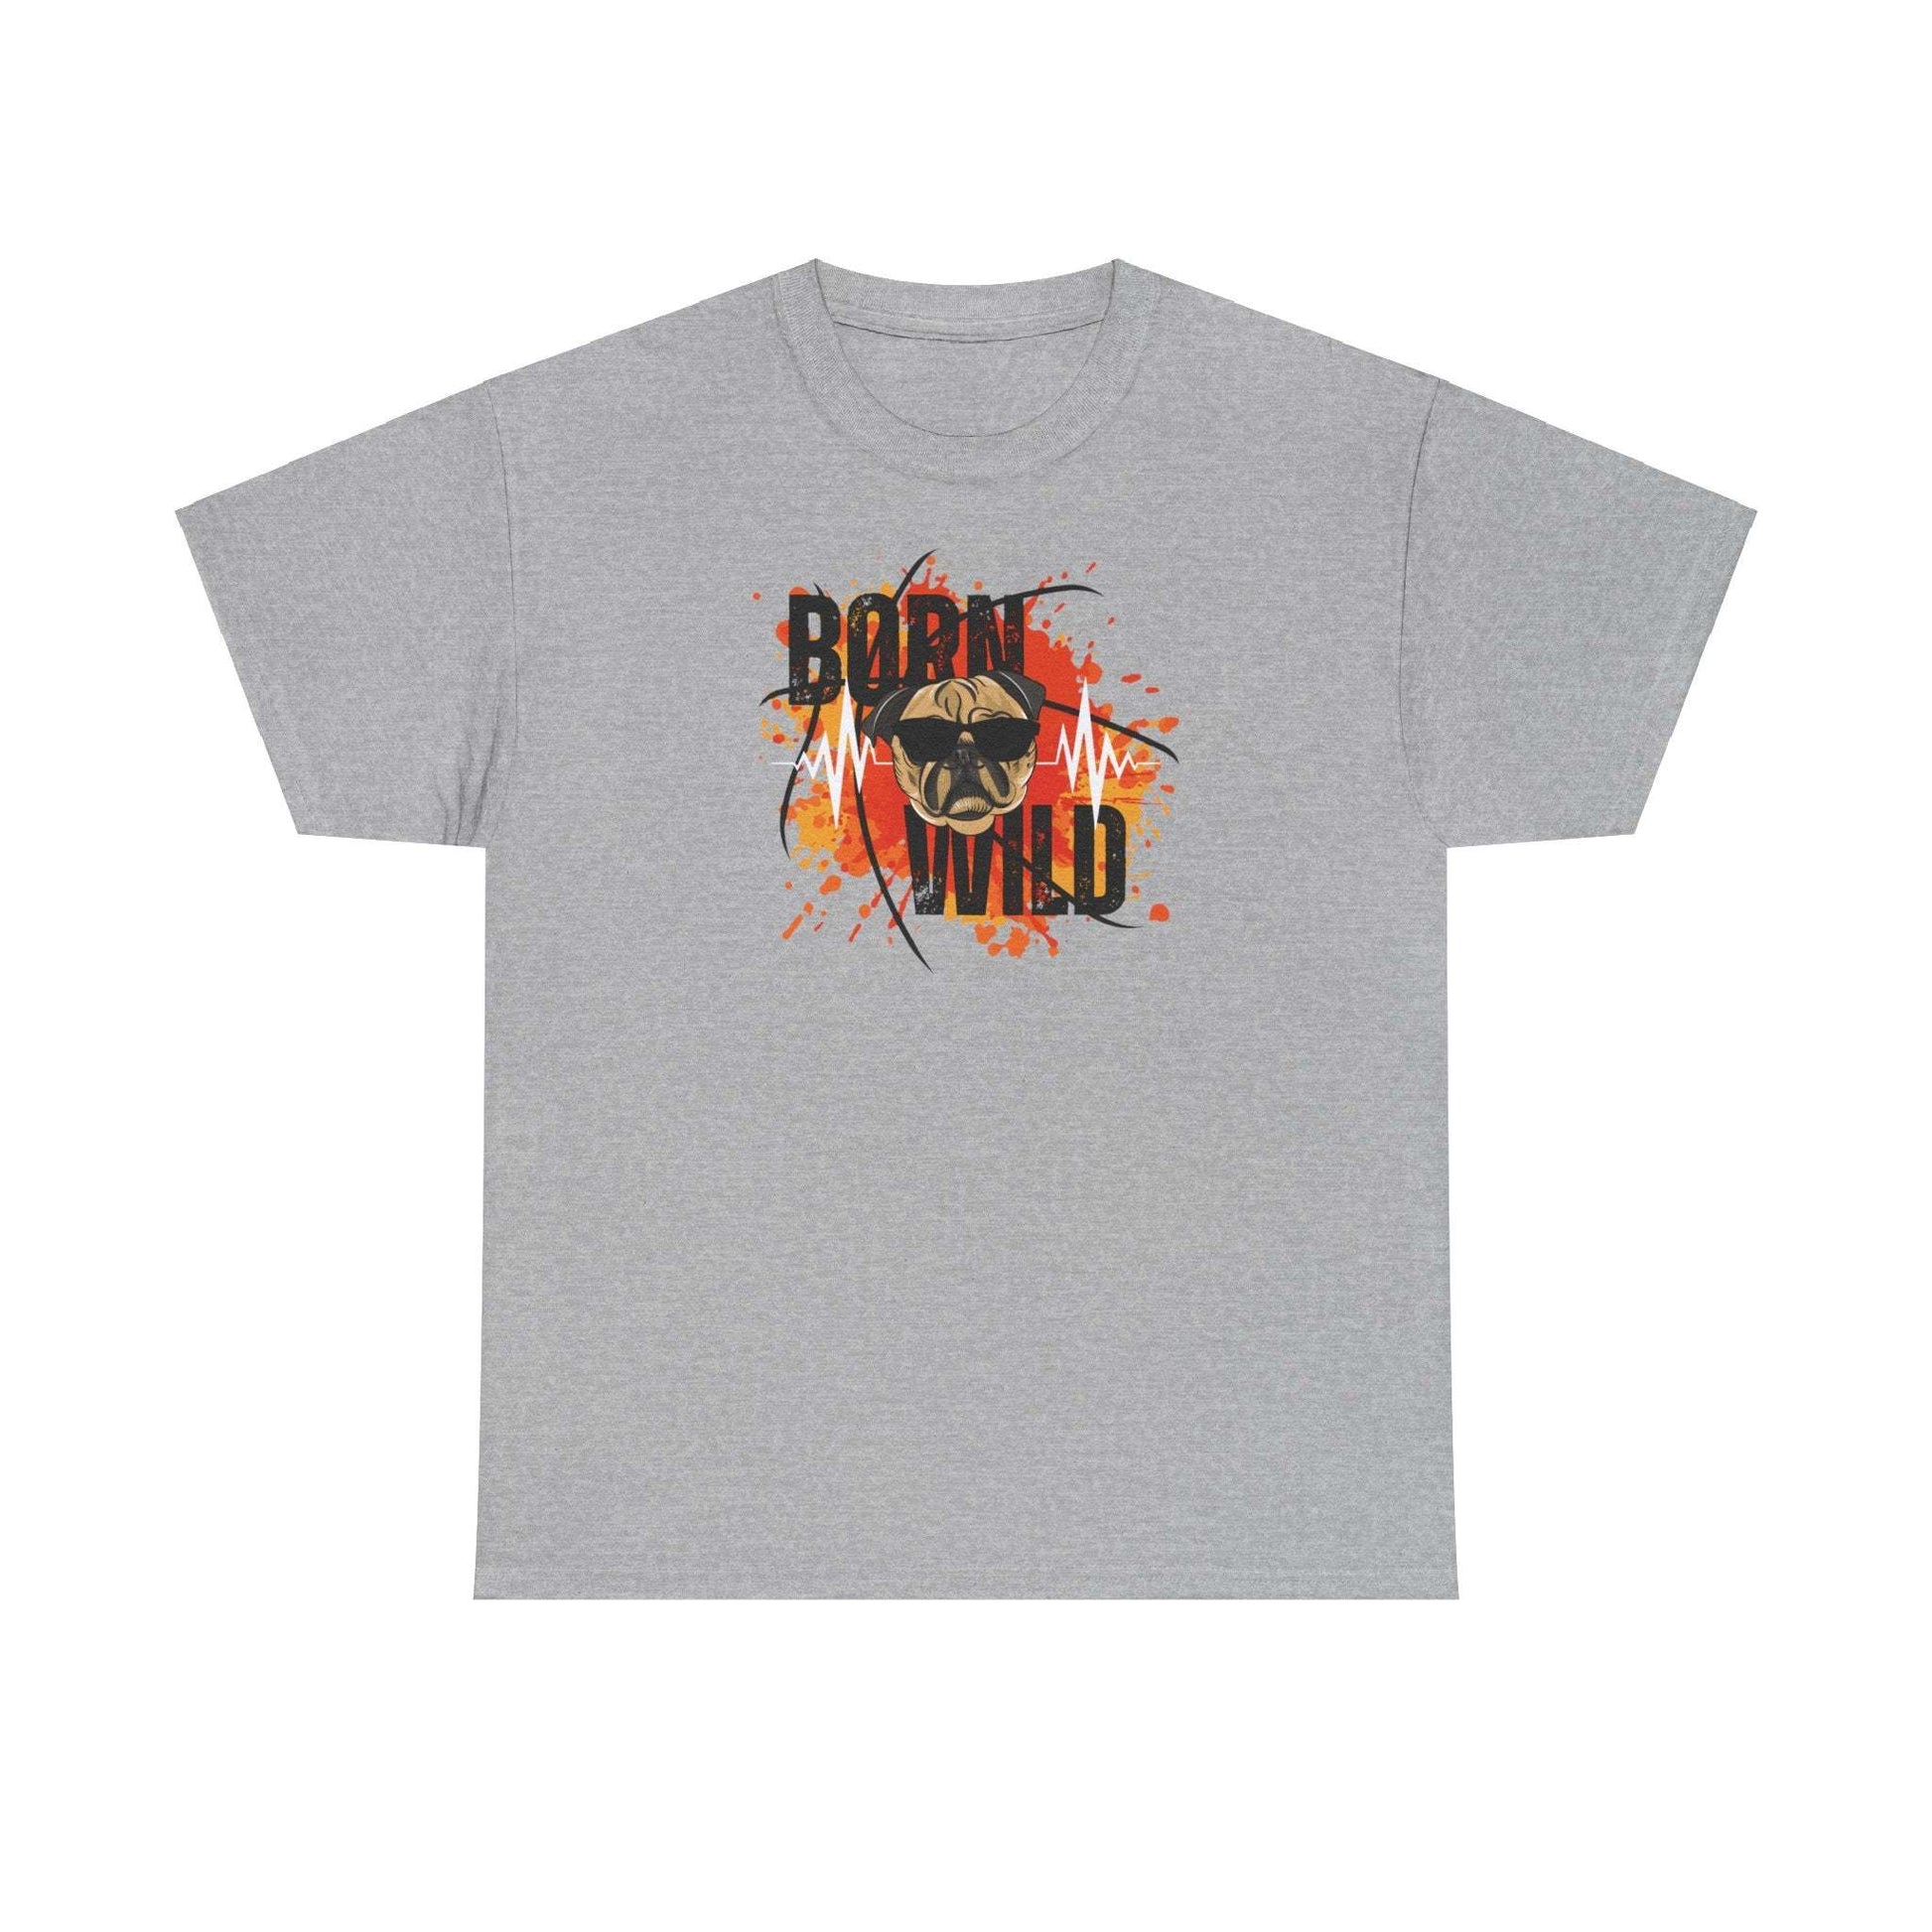 Pug T-Shirt, "Born Wild", Grey